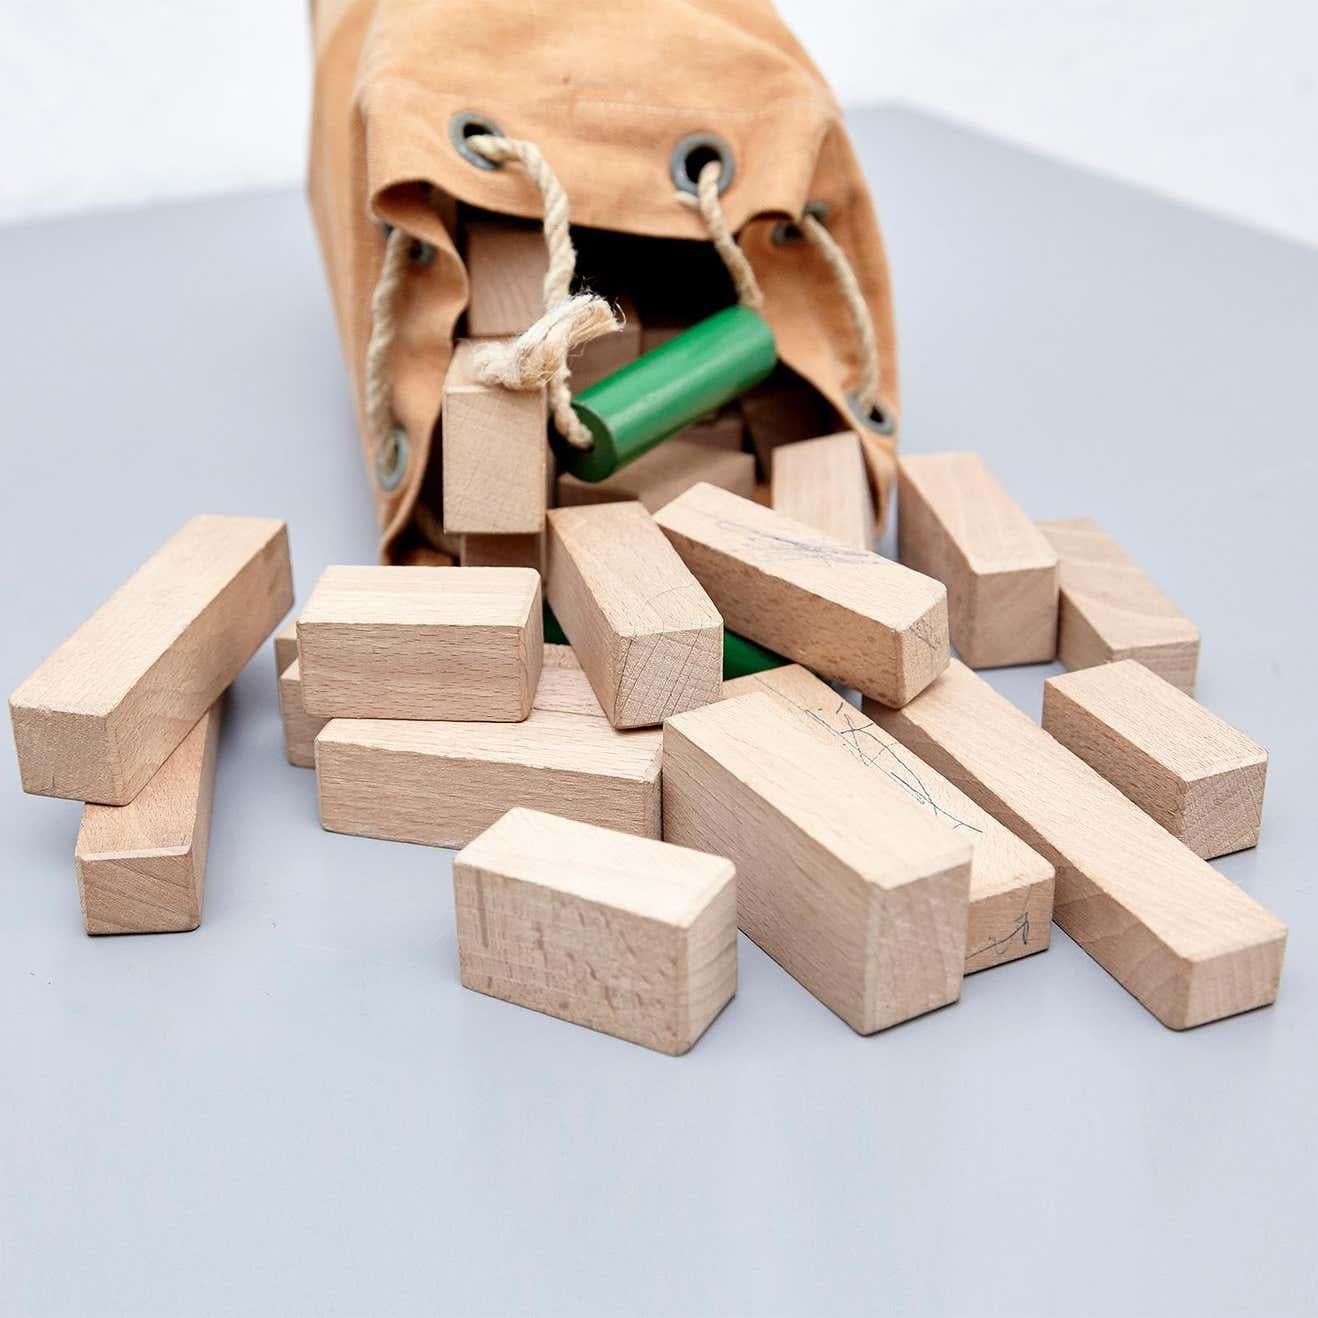 Ko Verzuu for Ado, Mid-Century Modern, Wood Blocks Construction Netherlands Toy For Sale 1